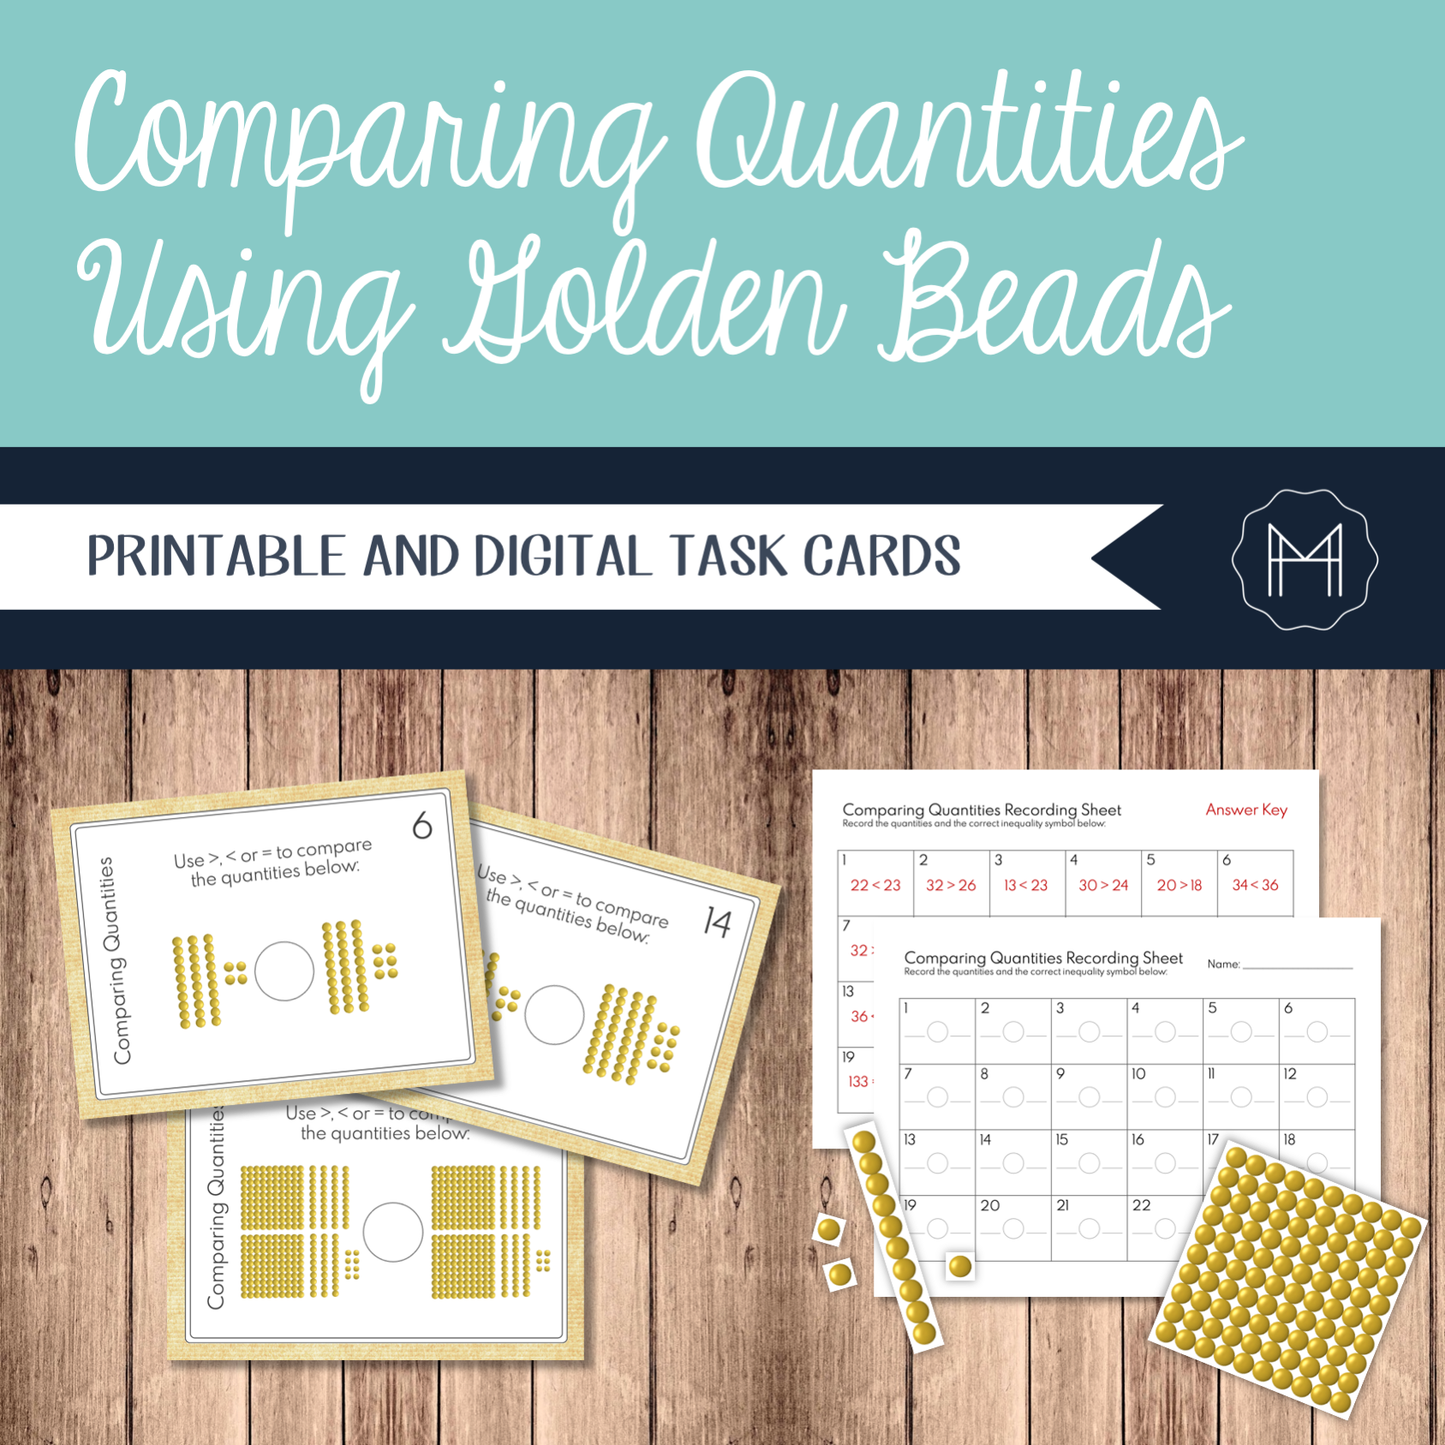 Comparing Quantities Using Golden Beads